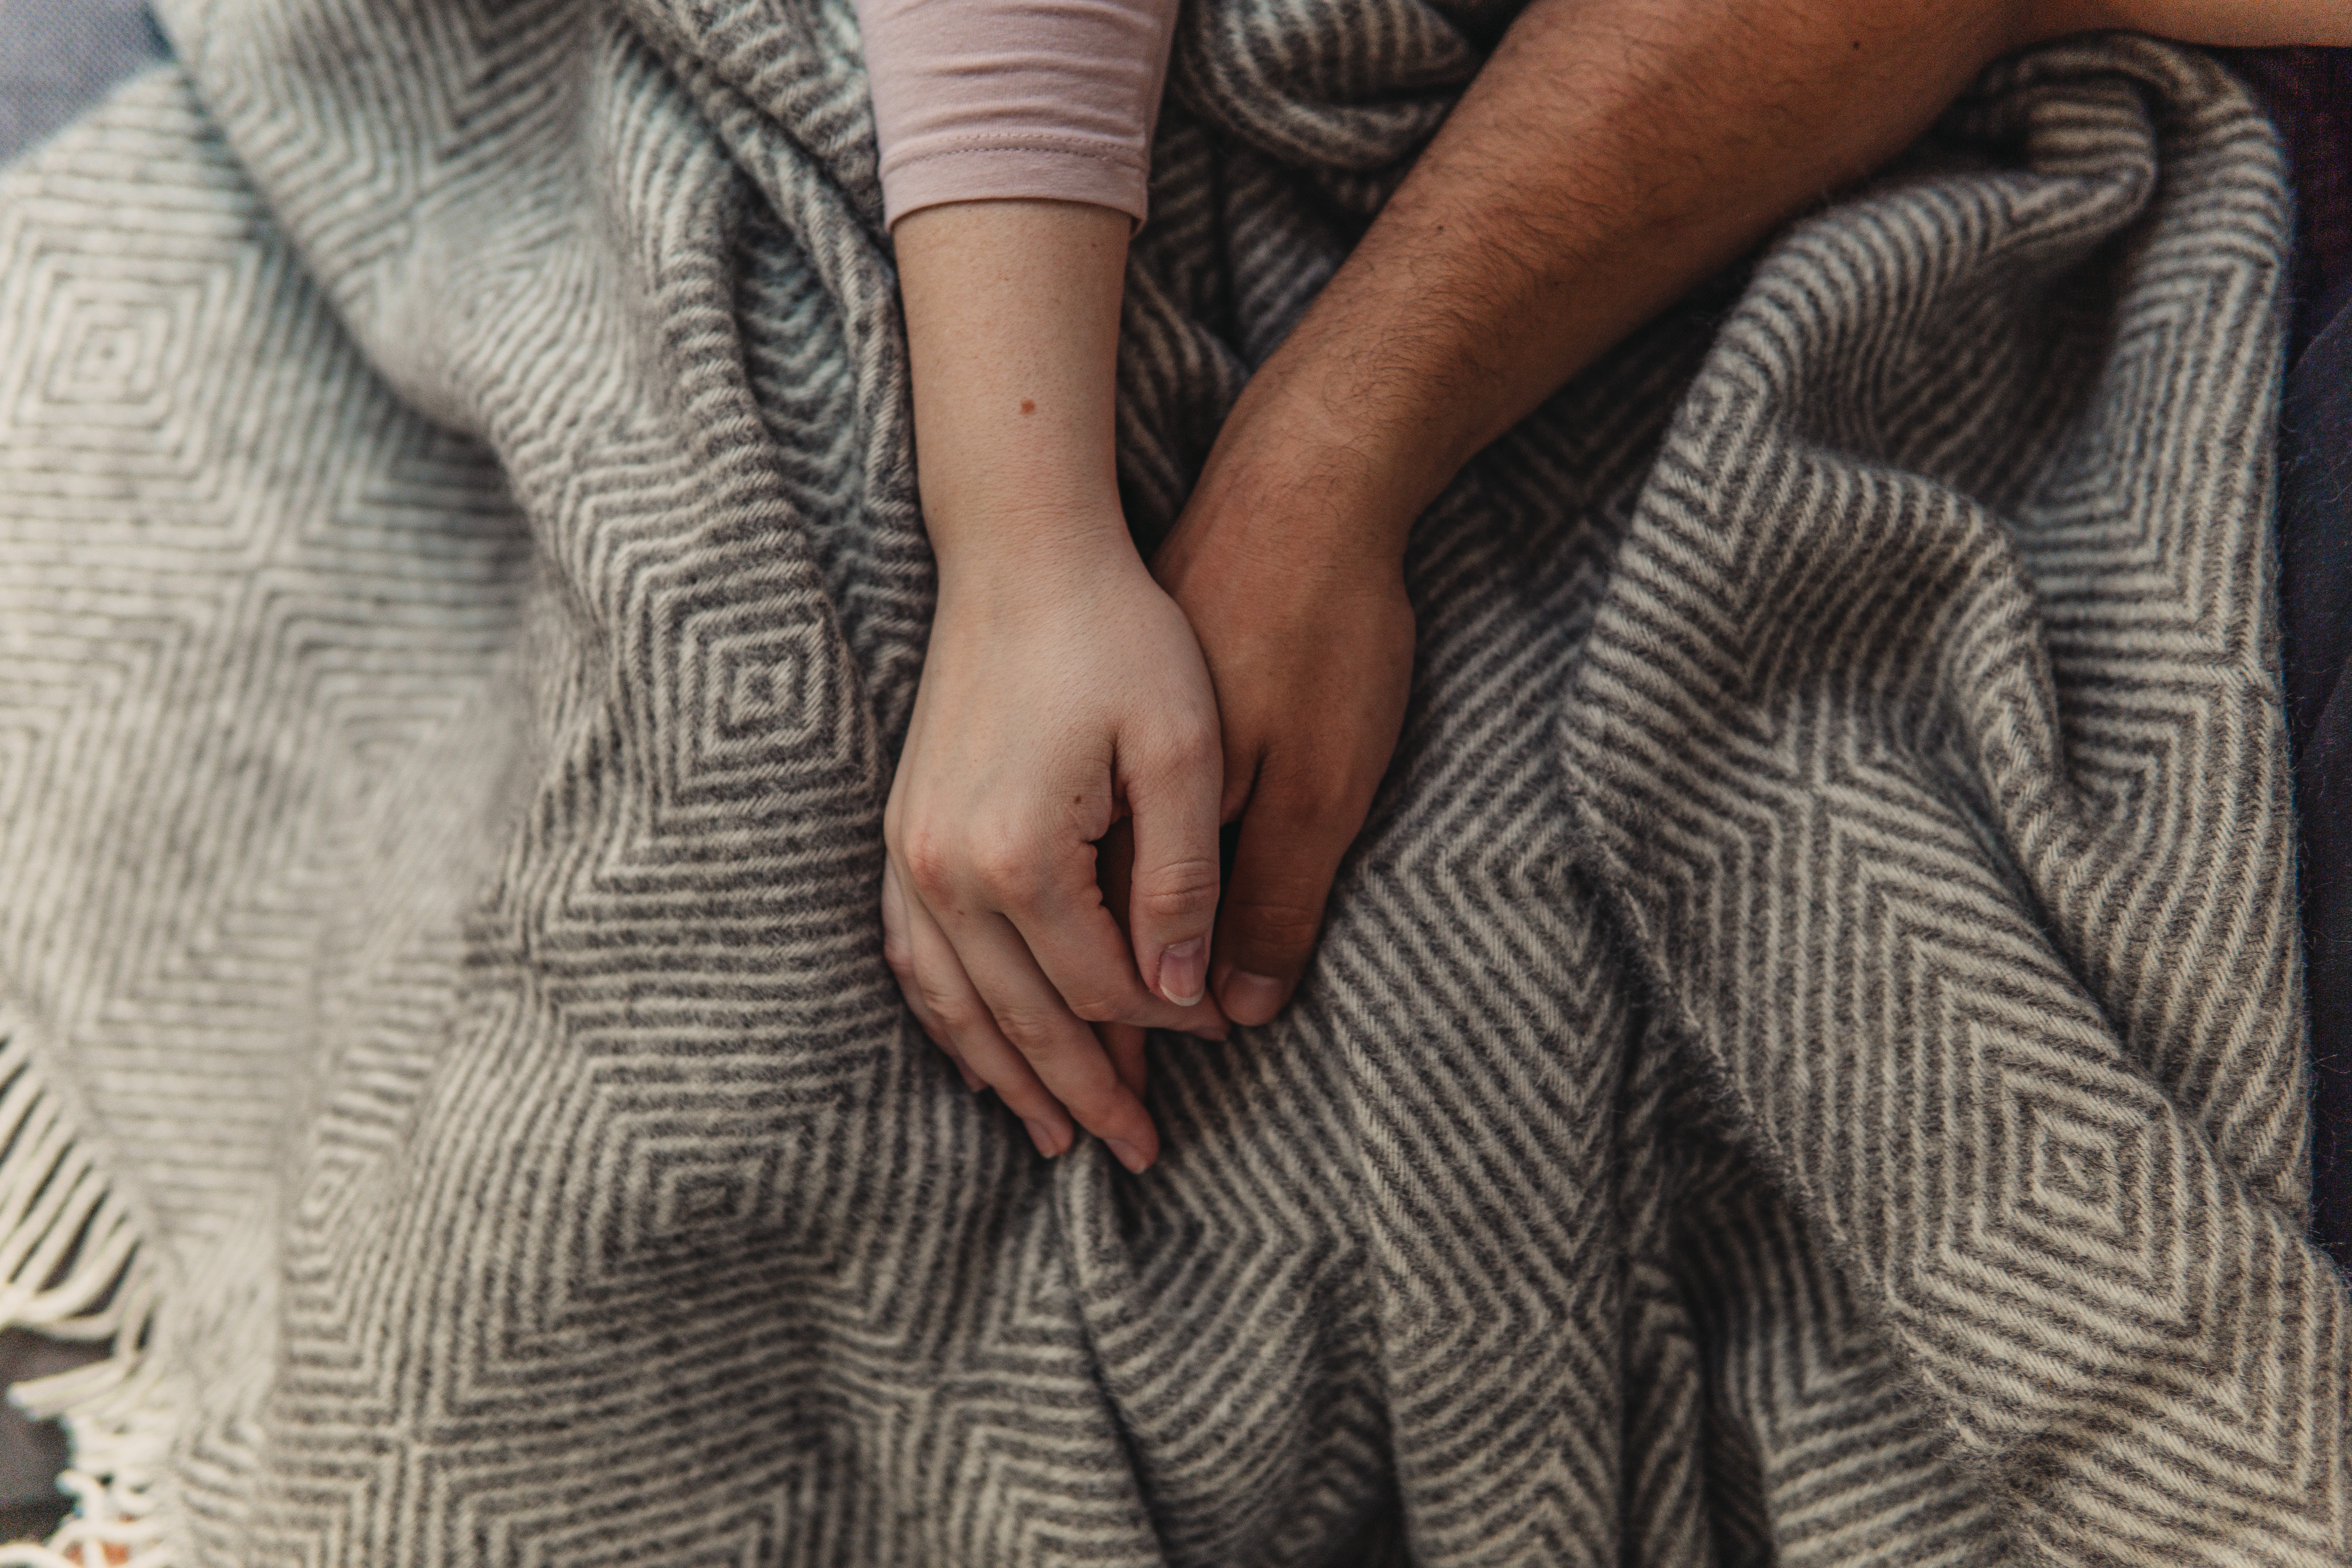 Couple holding hands | Source: Unsplash